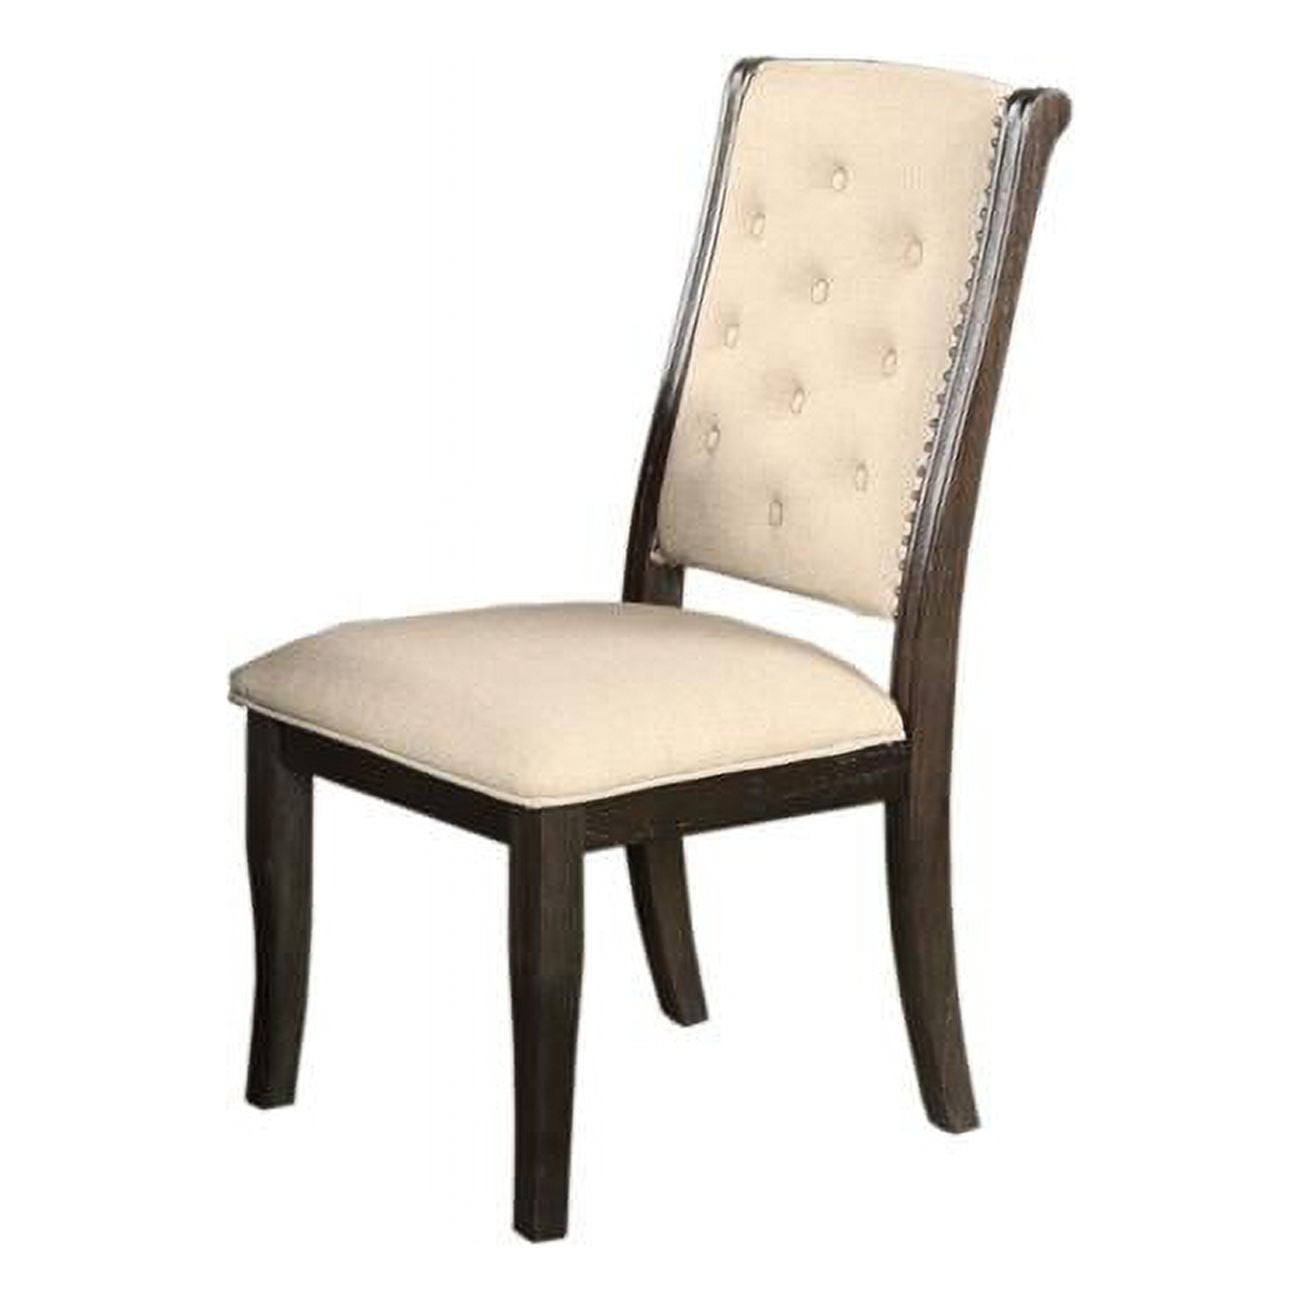 Picture of Best Master Furniture D1081 Rustic Dark Brown Chairs Rustic Dark Brown Dining Side Chair - Set of 2